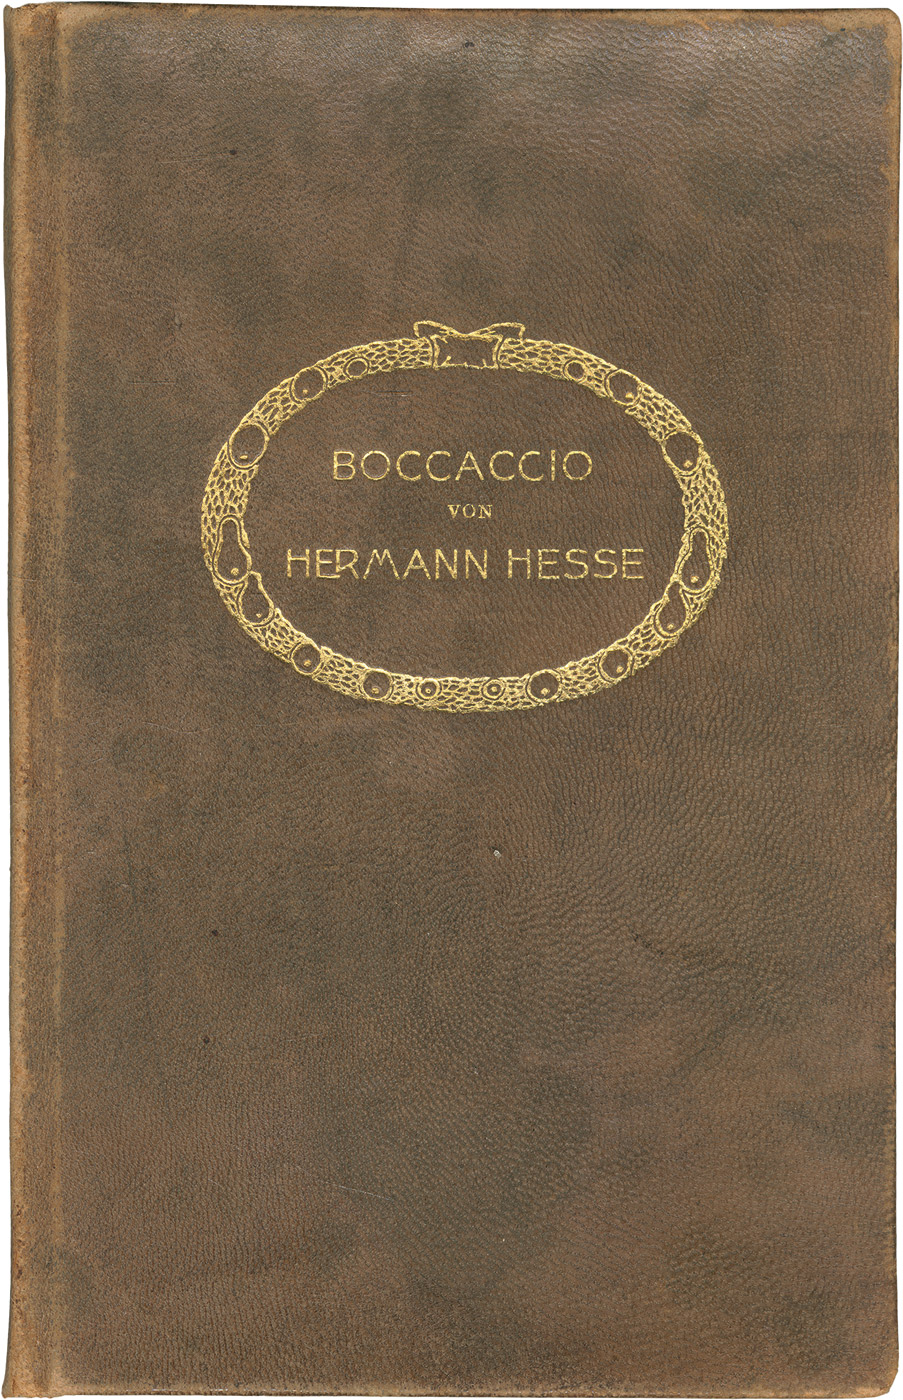 Lot 3157, Auction  115, Hesse, Hermann, Boccaccio